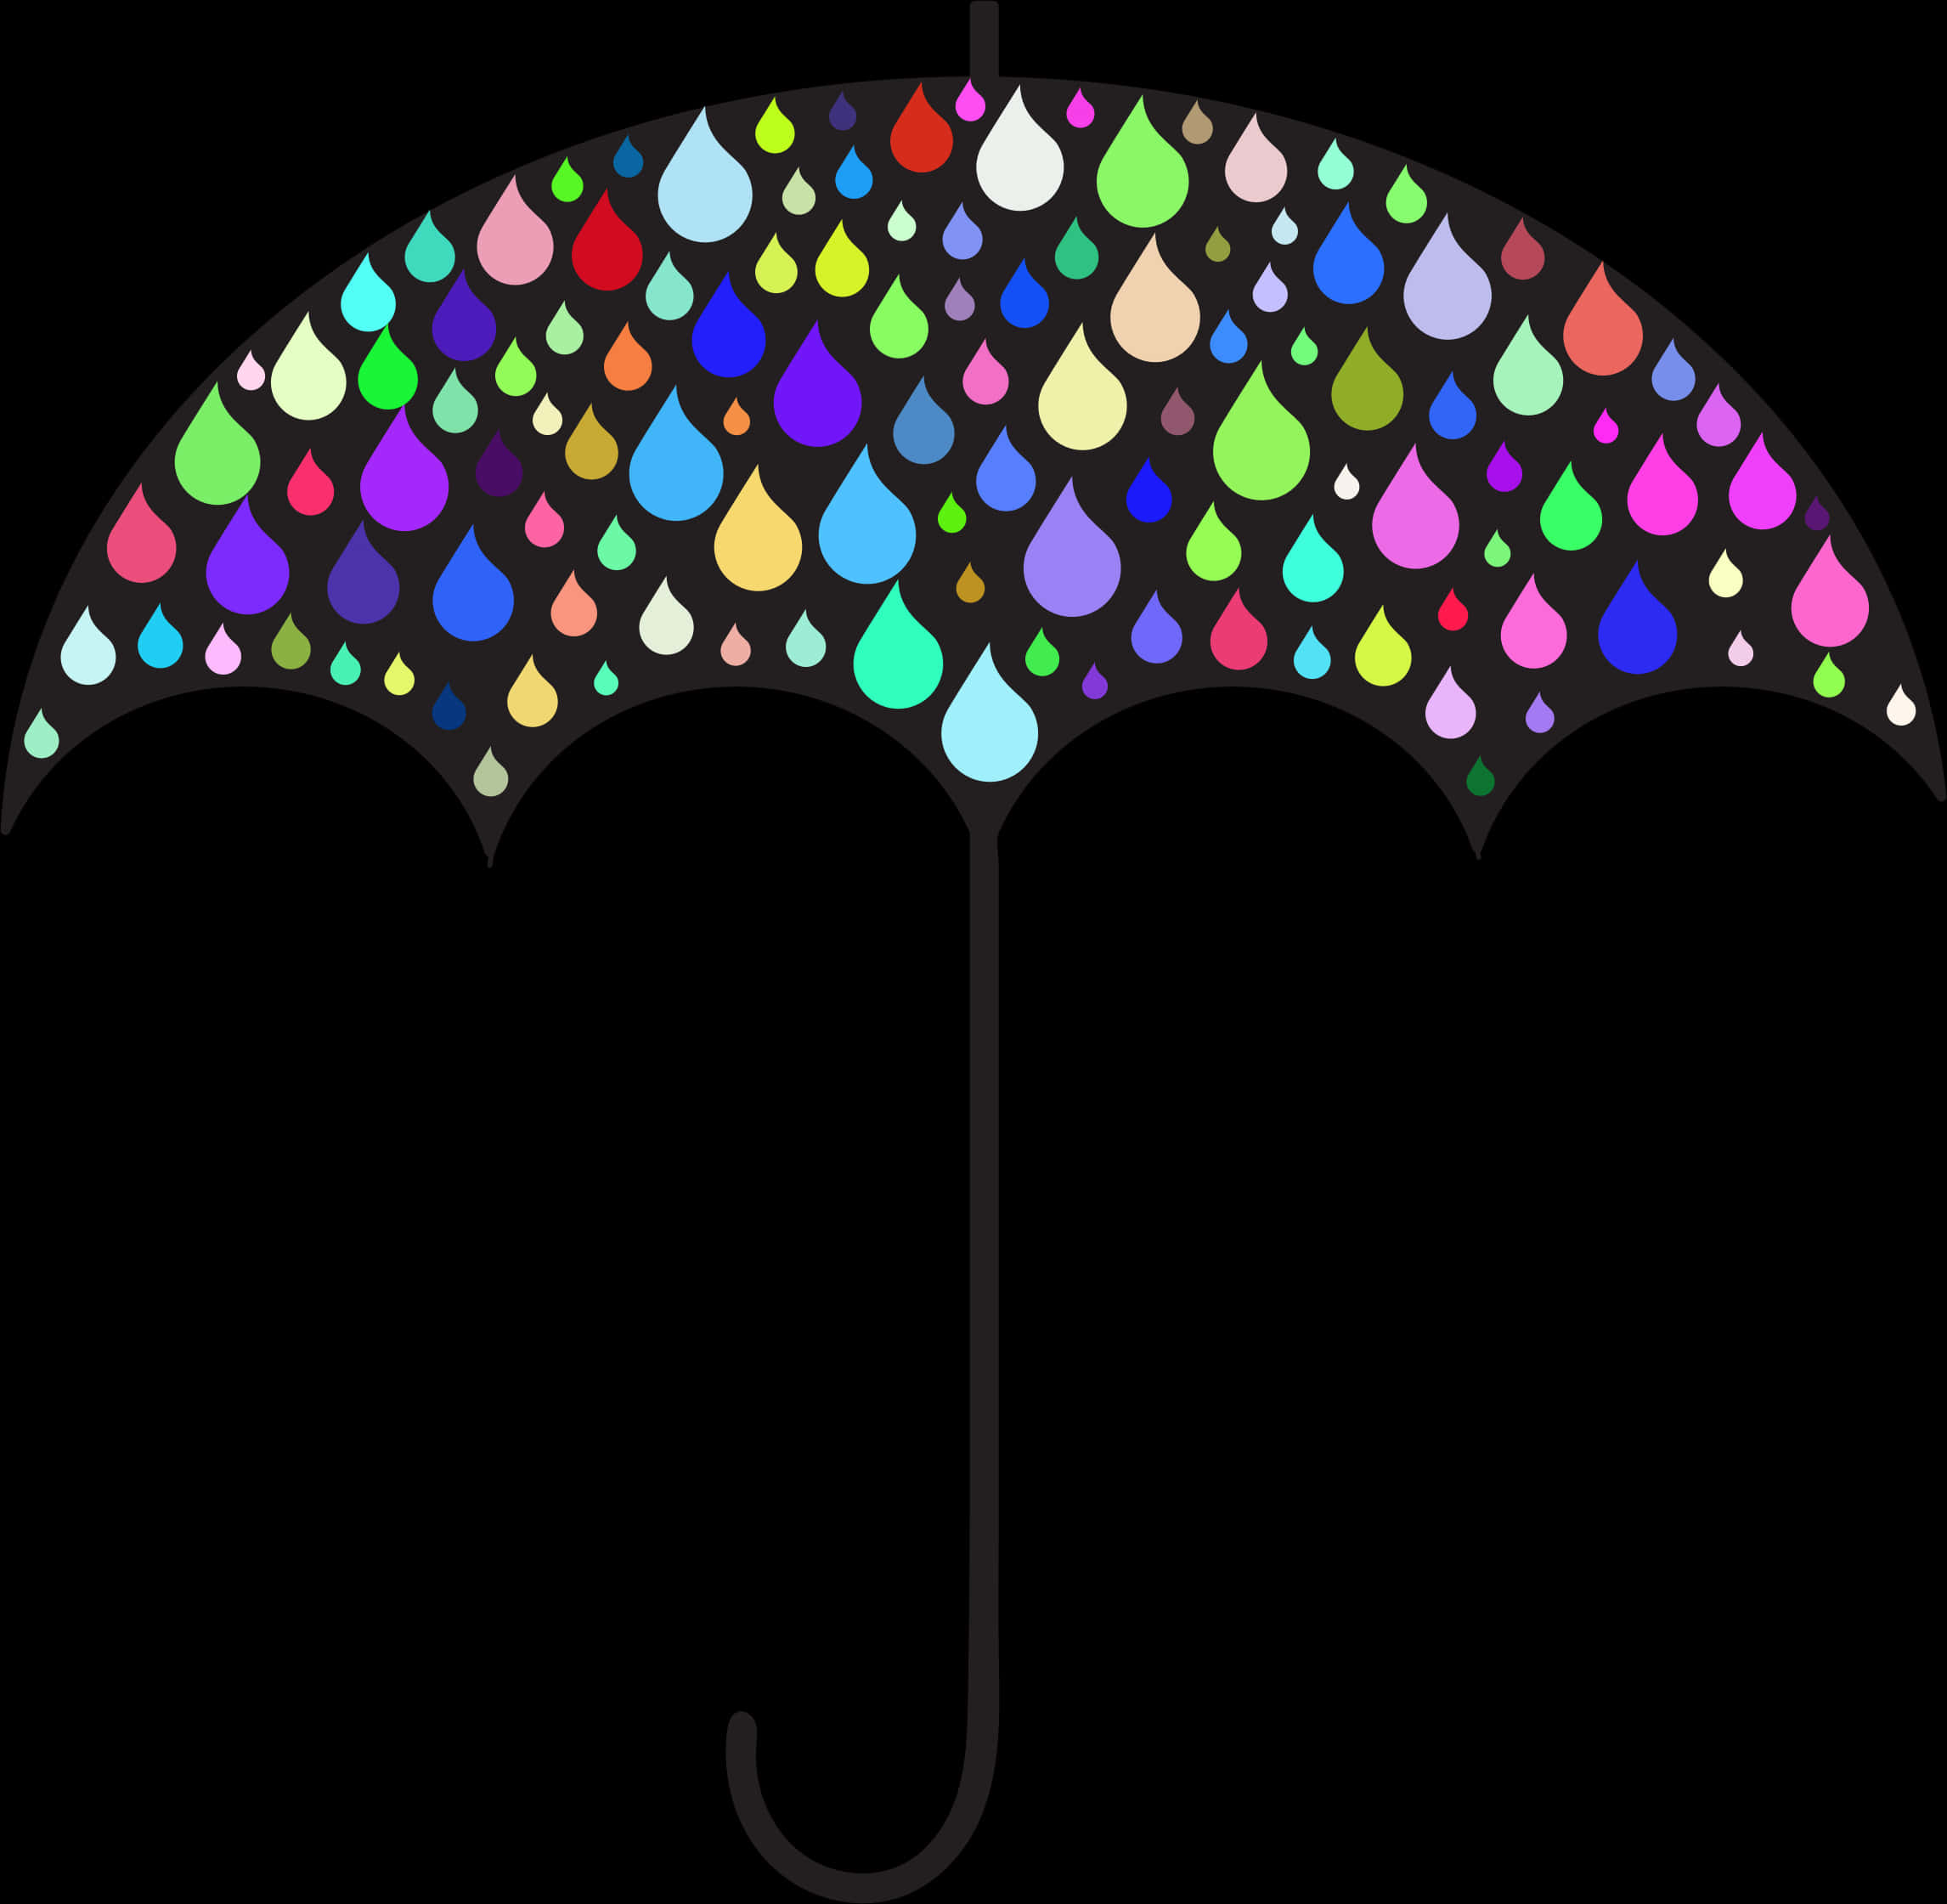 Colorful Raindrop Umbrella PNG image